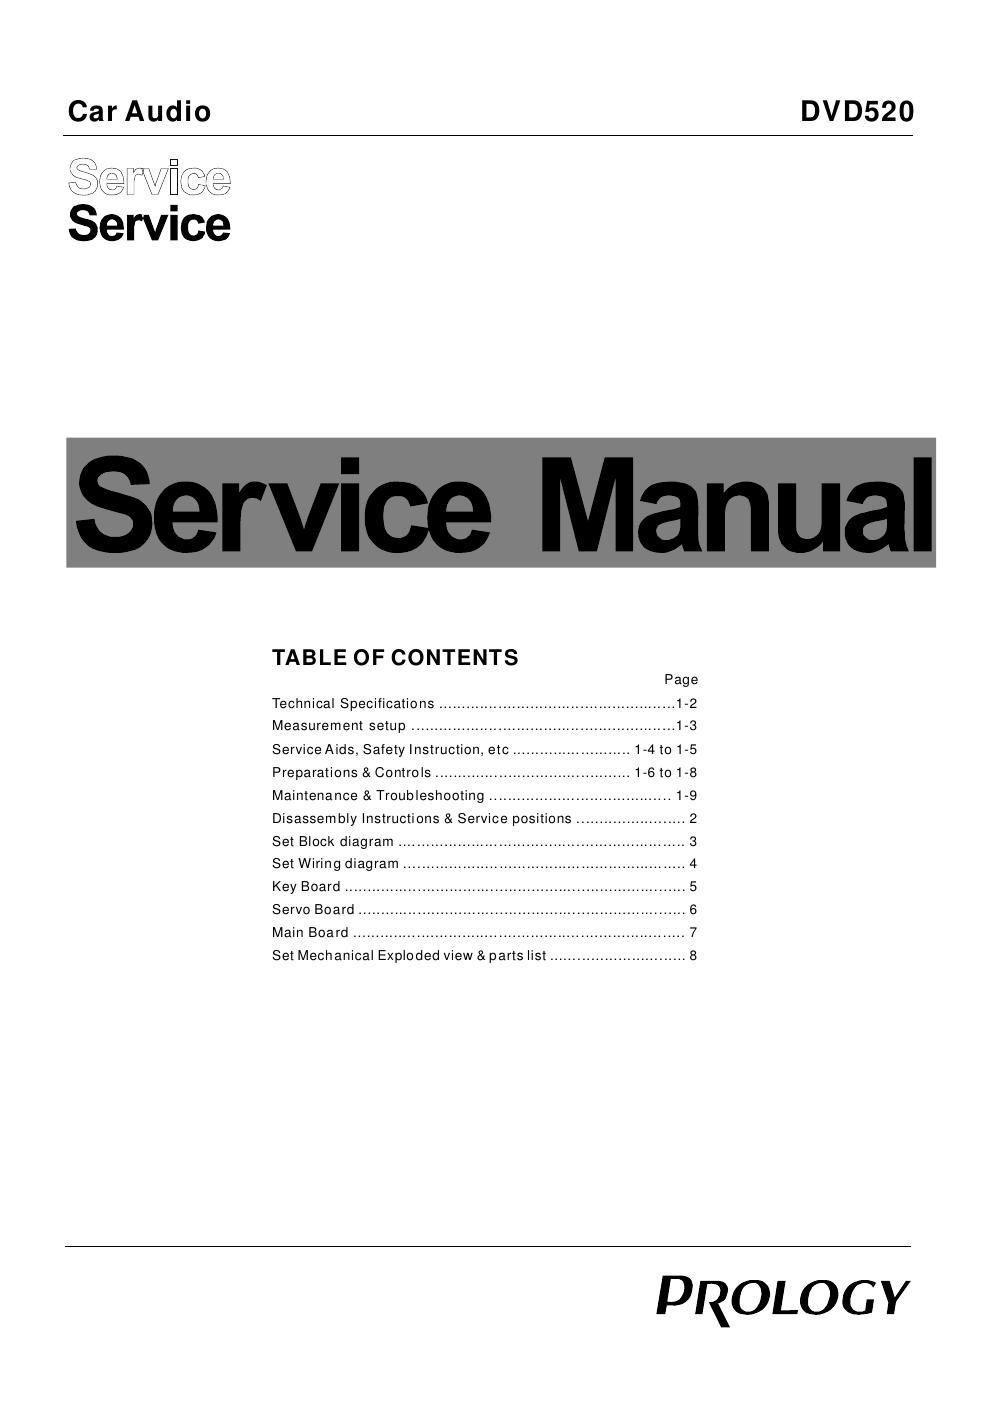 prology dvd 520 service manual